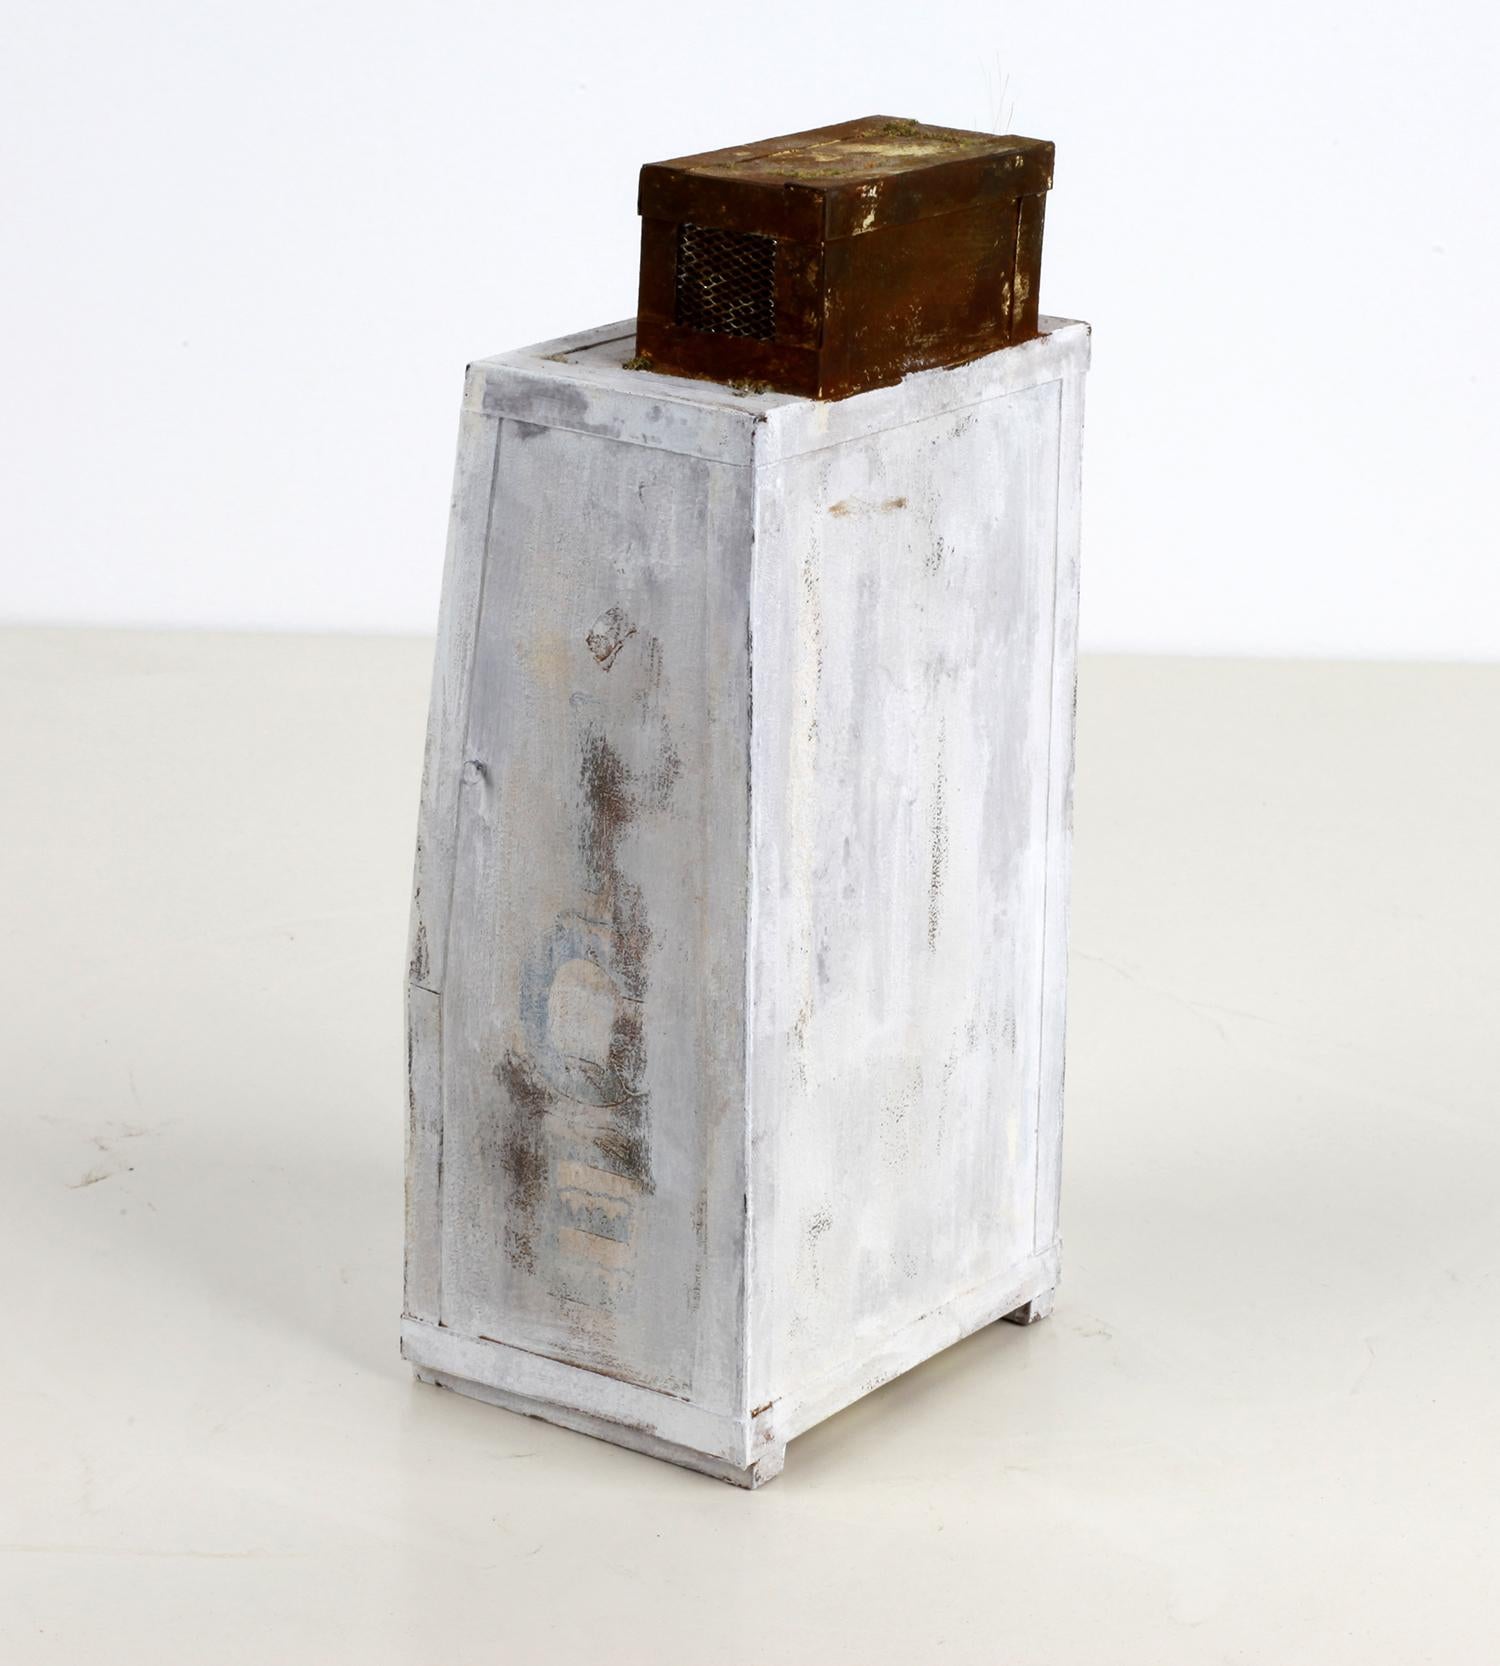 Broken Ice Box - Contemporary Sculpture by Drew Leshko